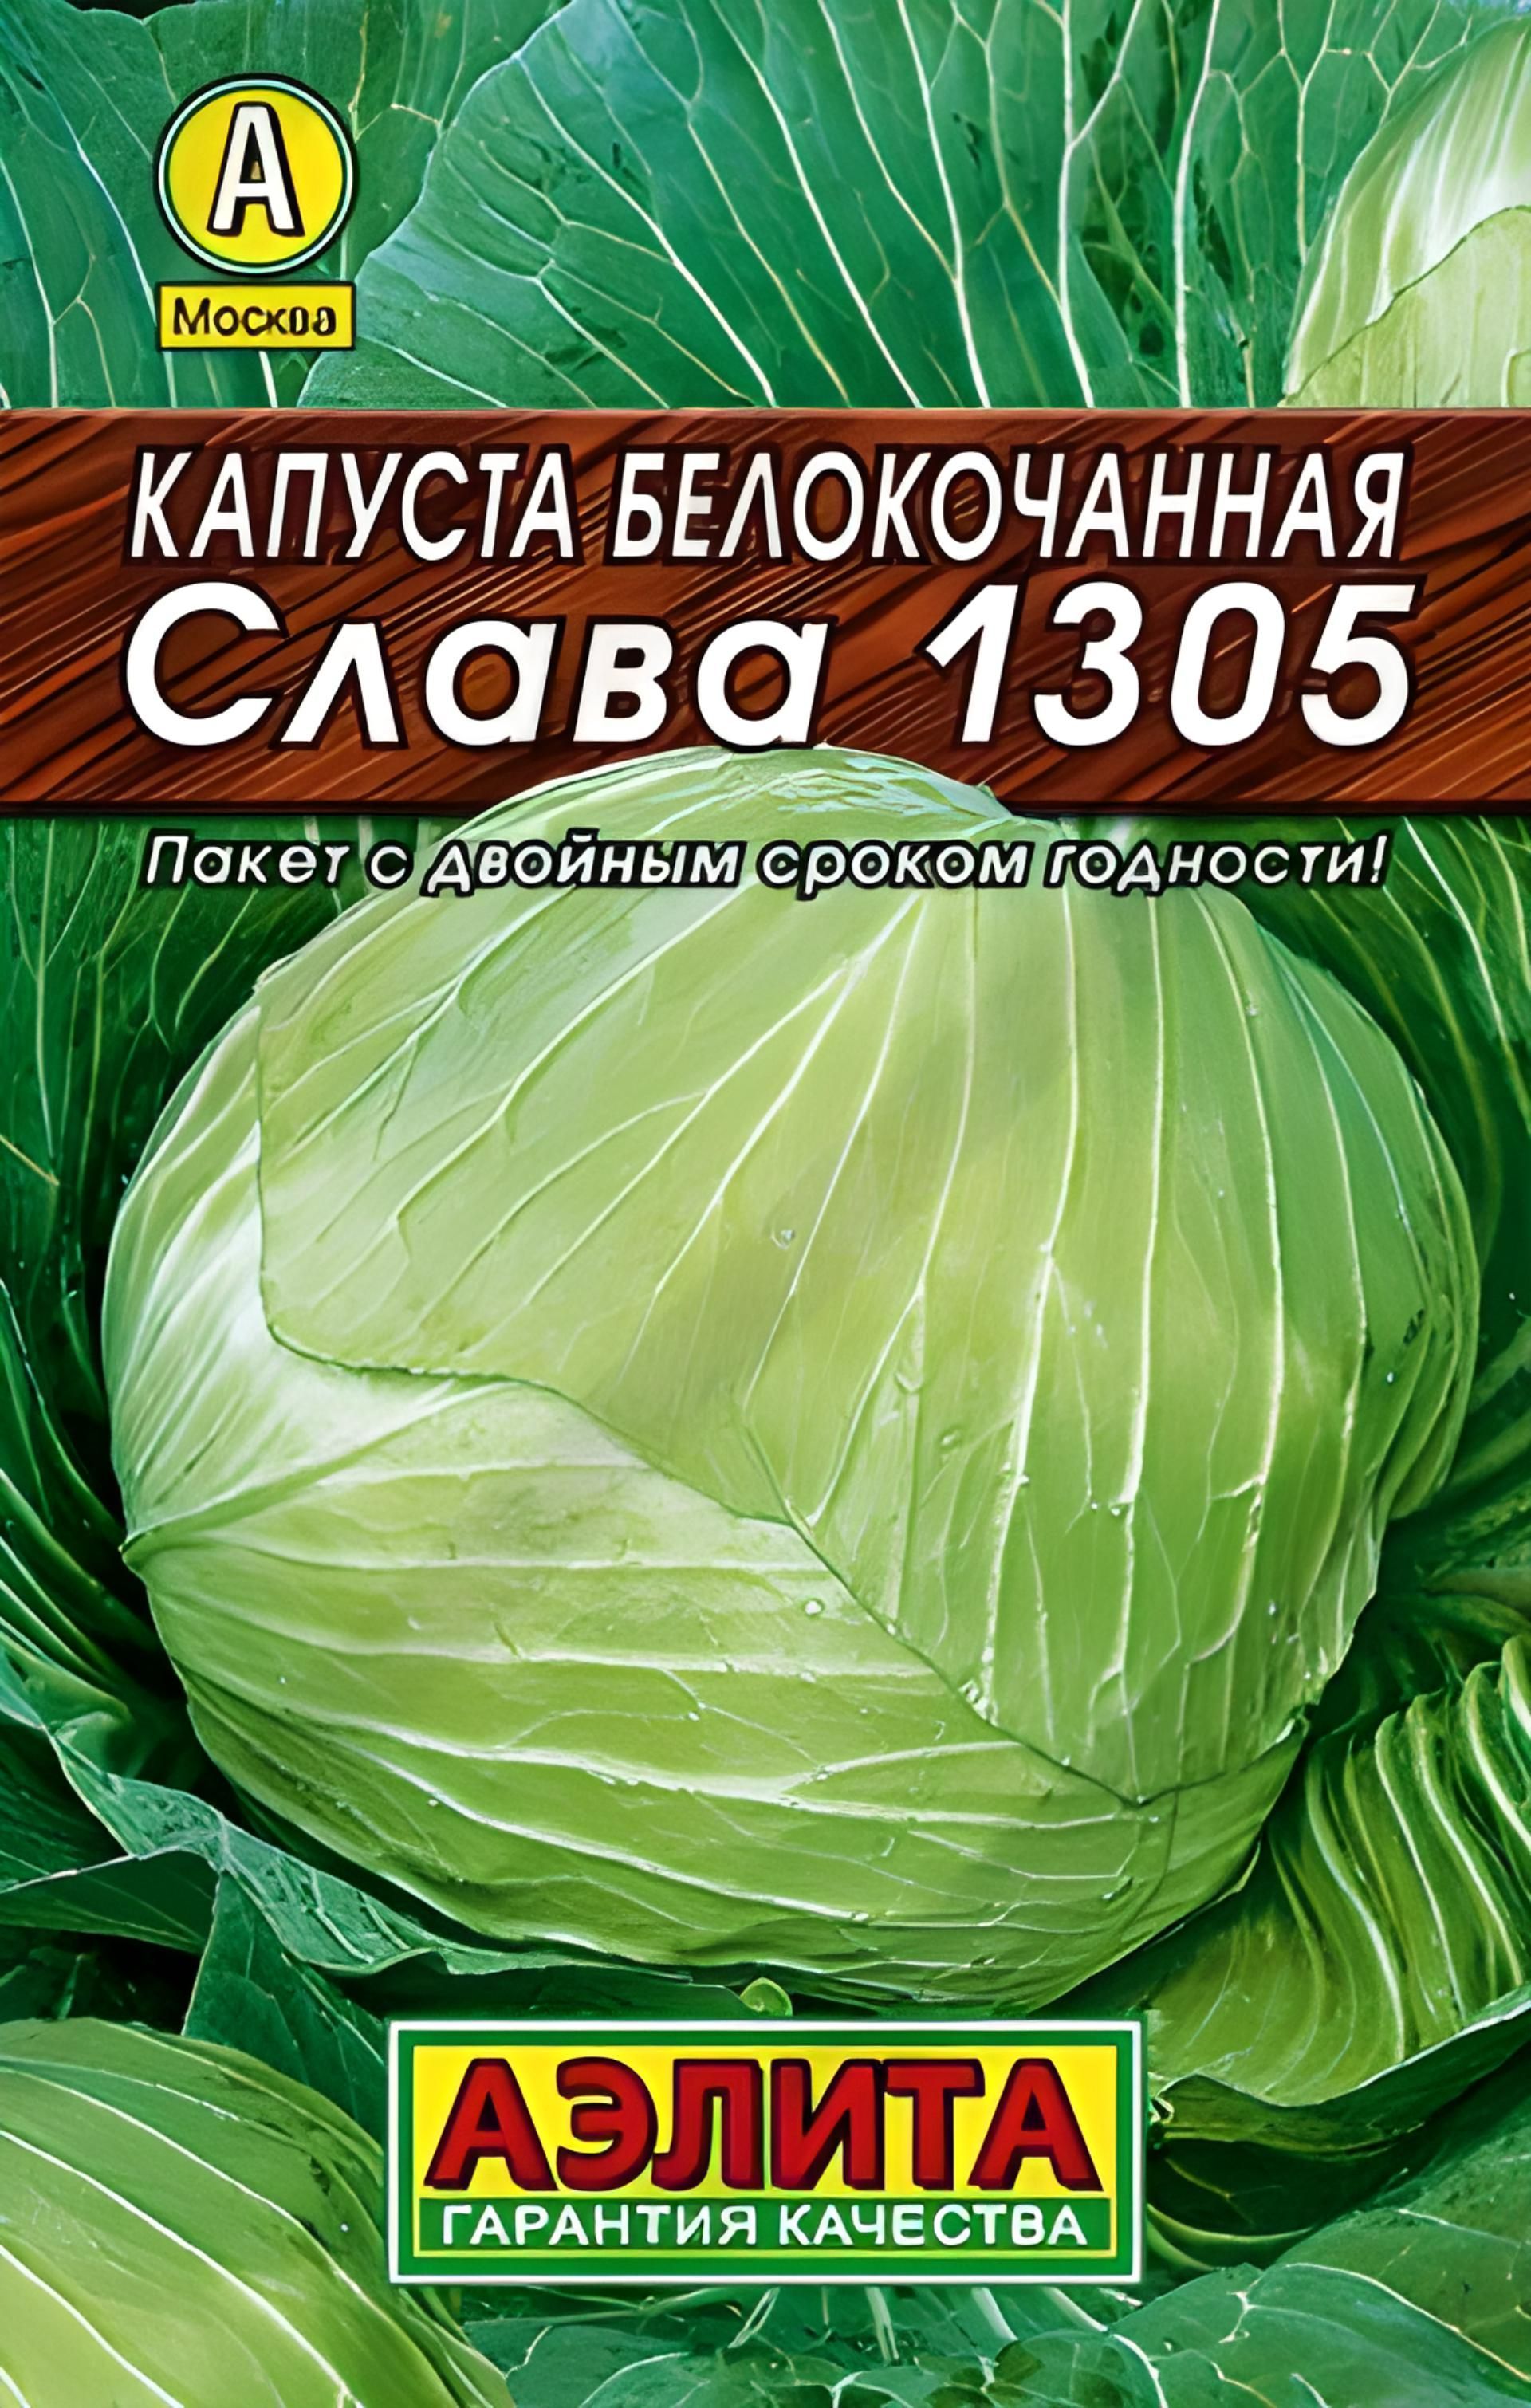 Капуста слава 1305 описание сорта. Семена капуста белокочанная Слава 1305 (Семетра) 0,5гр. Капуста Слава 1305 семена.